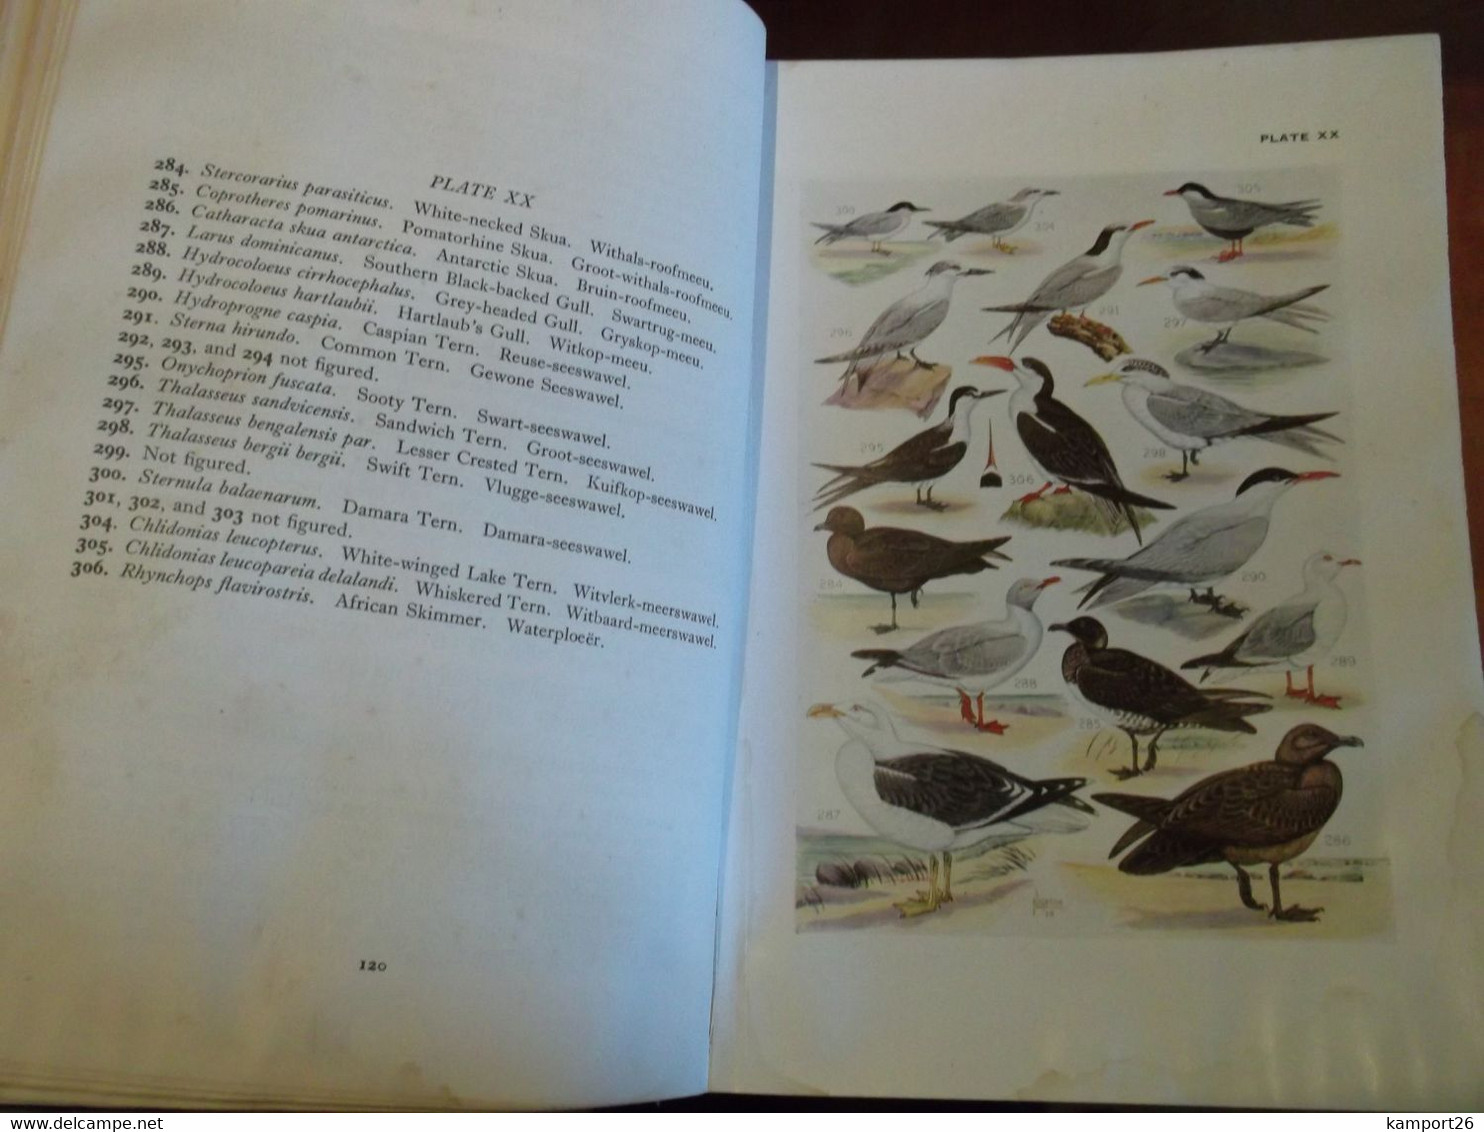 1953 The Birds of South Africa AUSTIN ROBERTS Ornithology Le monde de l'ornithologie